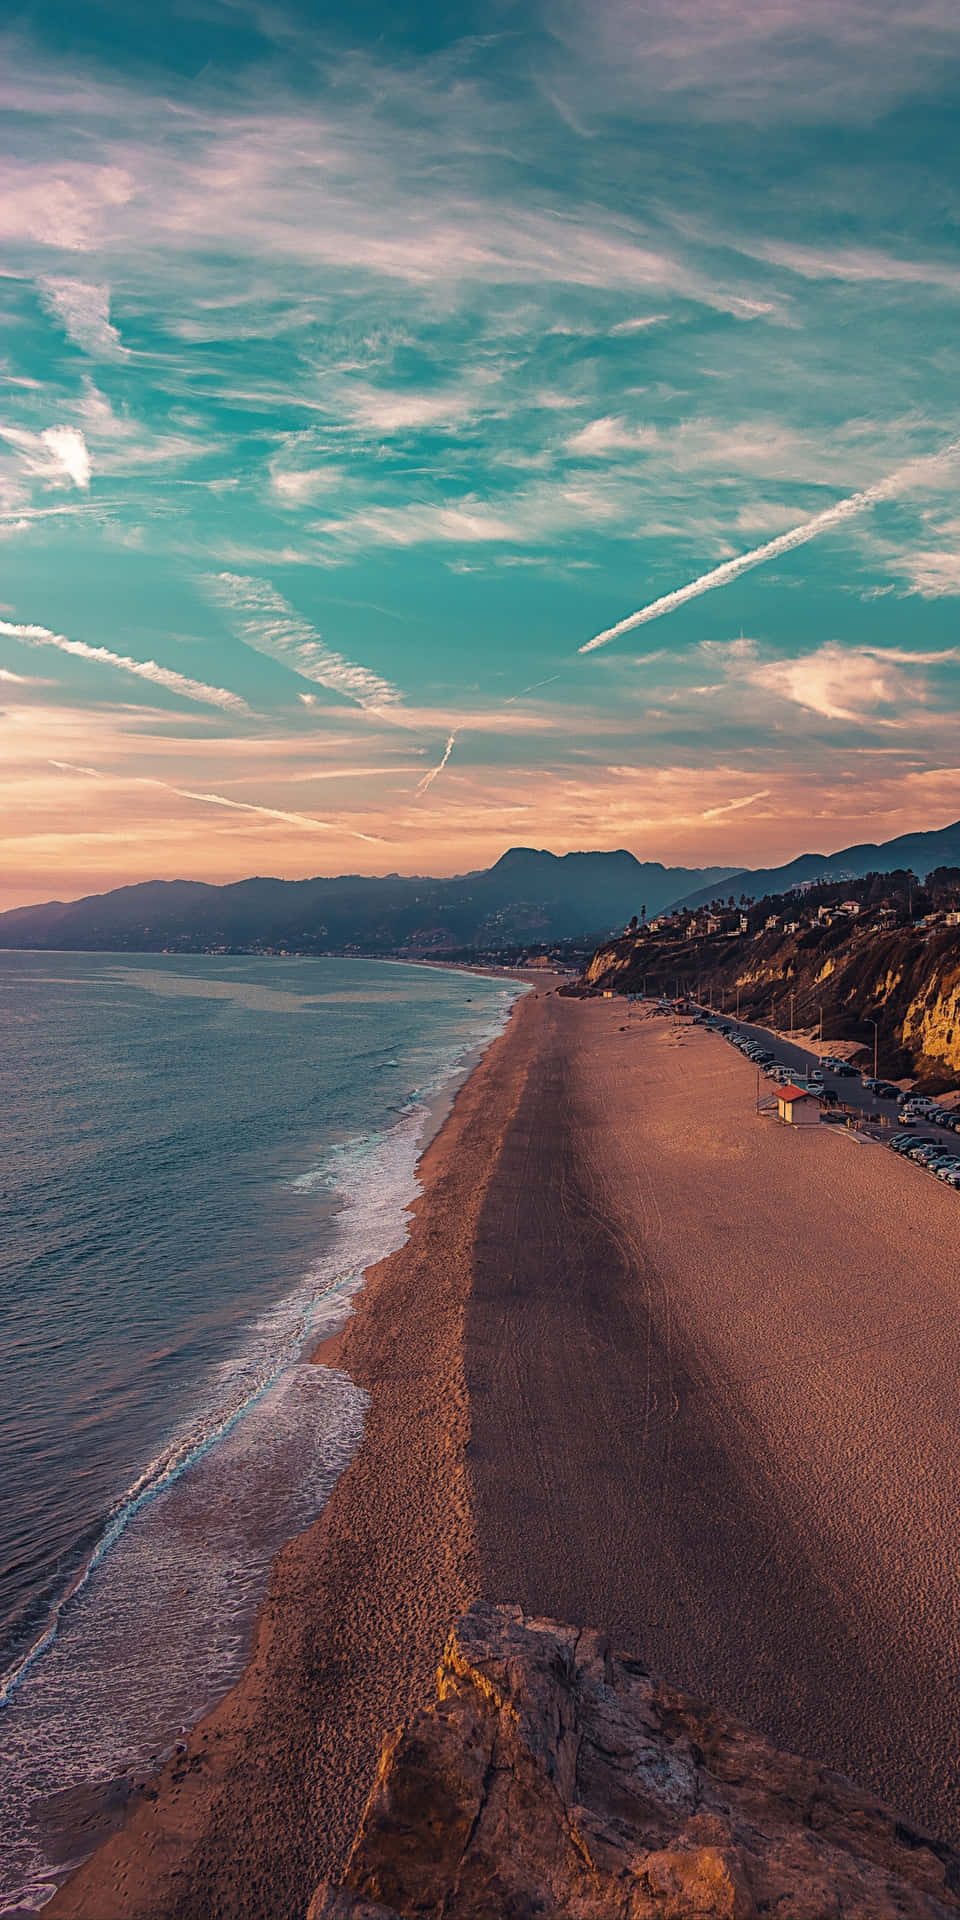 Umdeslumbrante Pôr Do Sol Subaquático Capturado Perfeitamente No Celular Pixel 3. #vivasemfio #praiaparadisíaca #pixel3